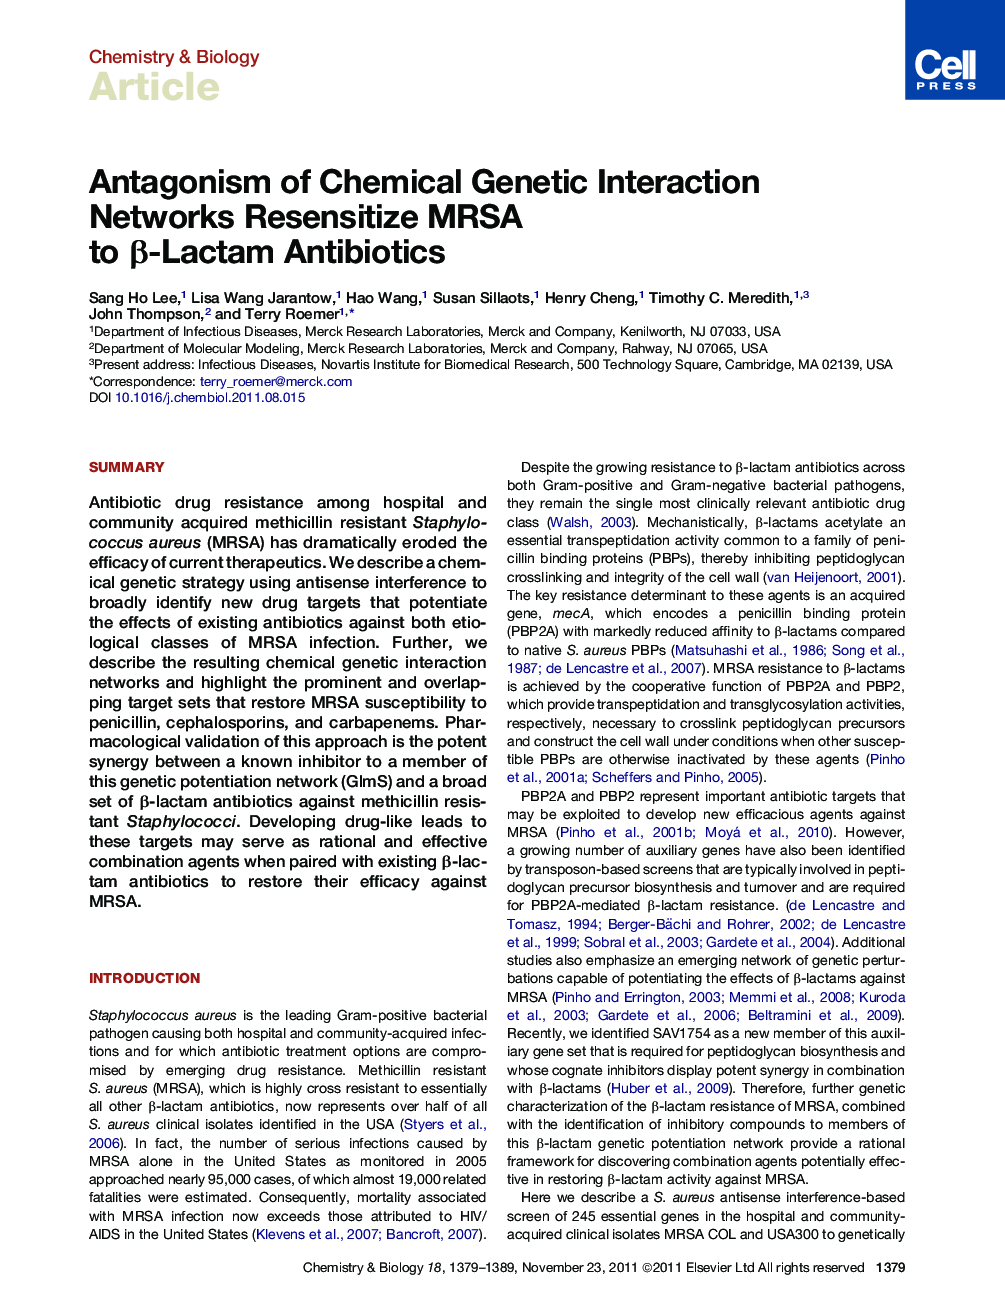 Antagonism of Chemical Genetic Interaction Networks Resensitize MRSA to β-Lactam Antibiotics